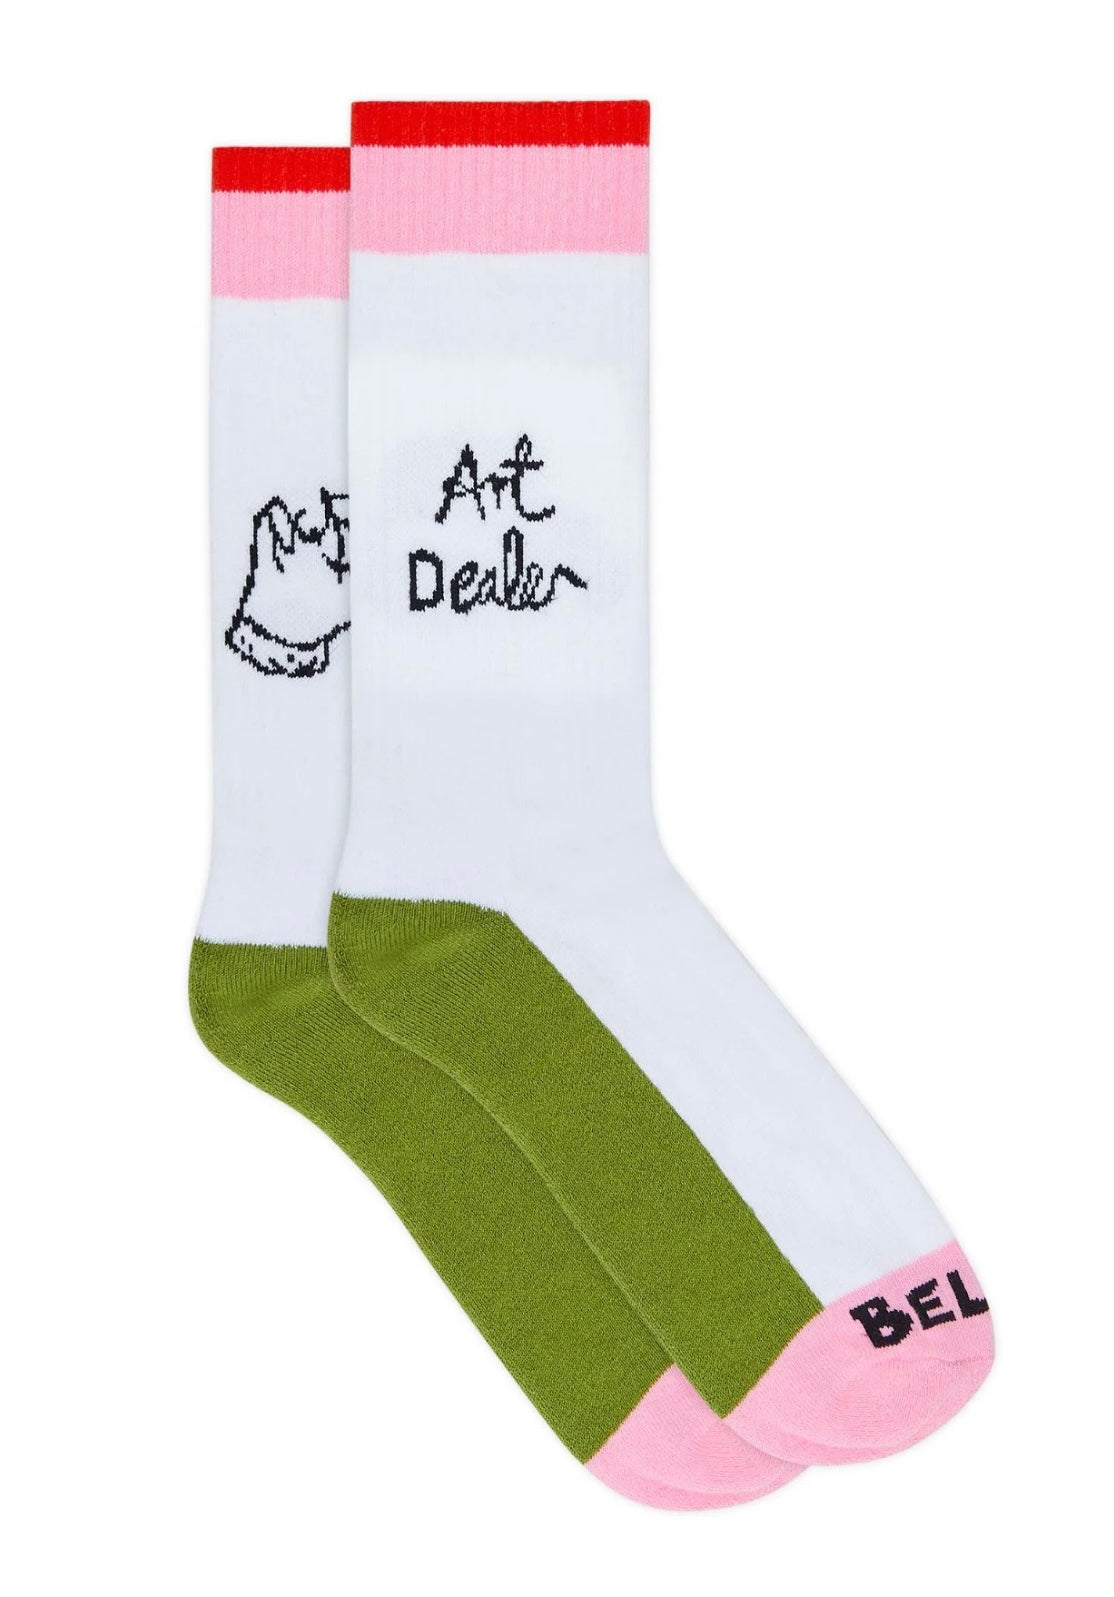 Bella freud art dealer socks